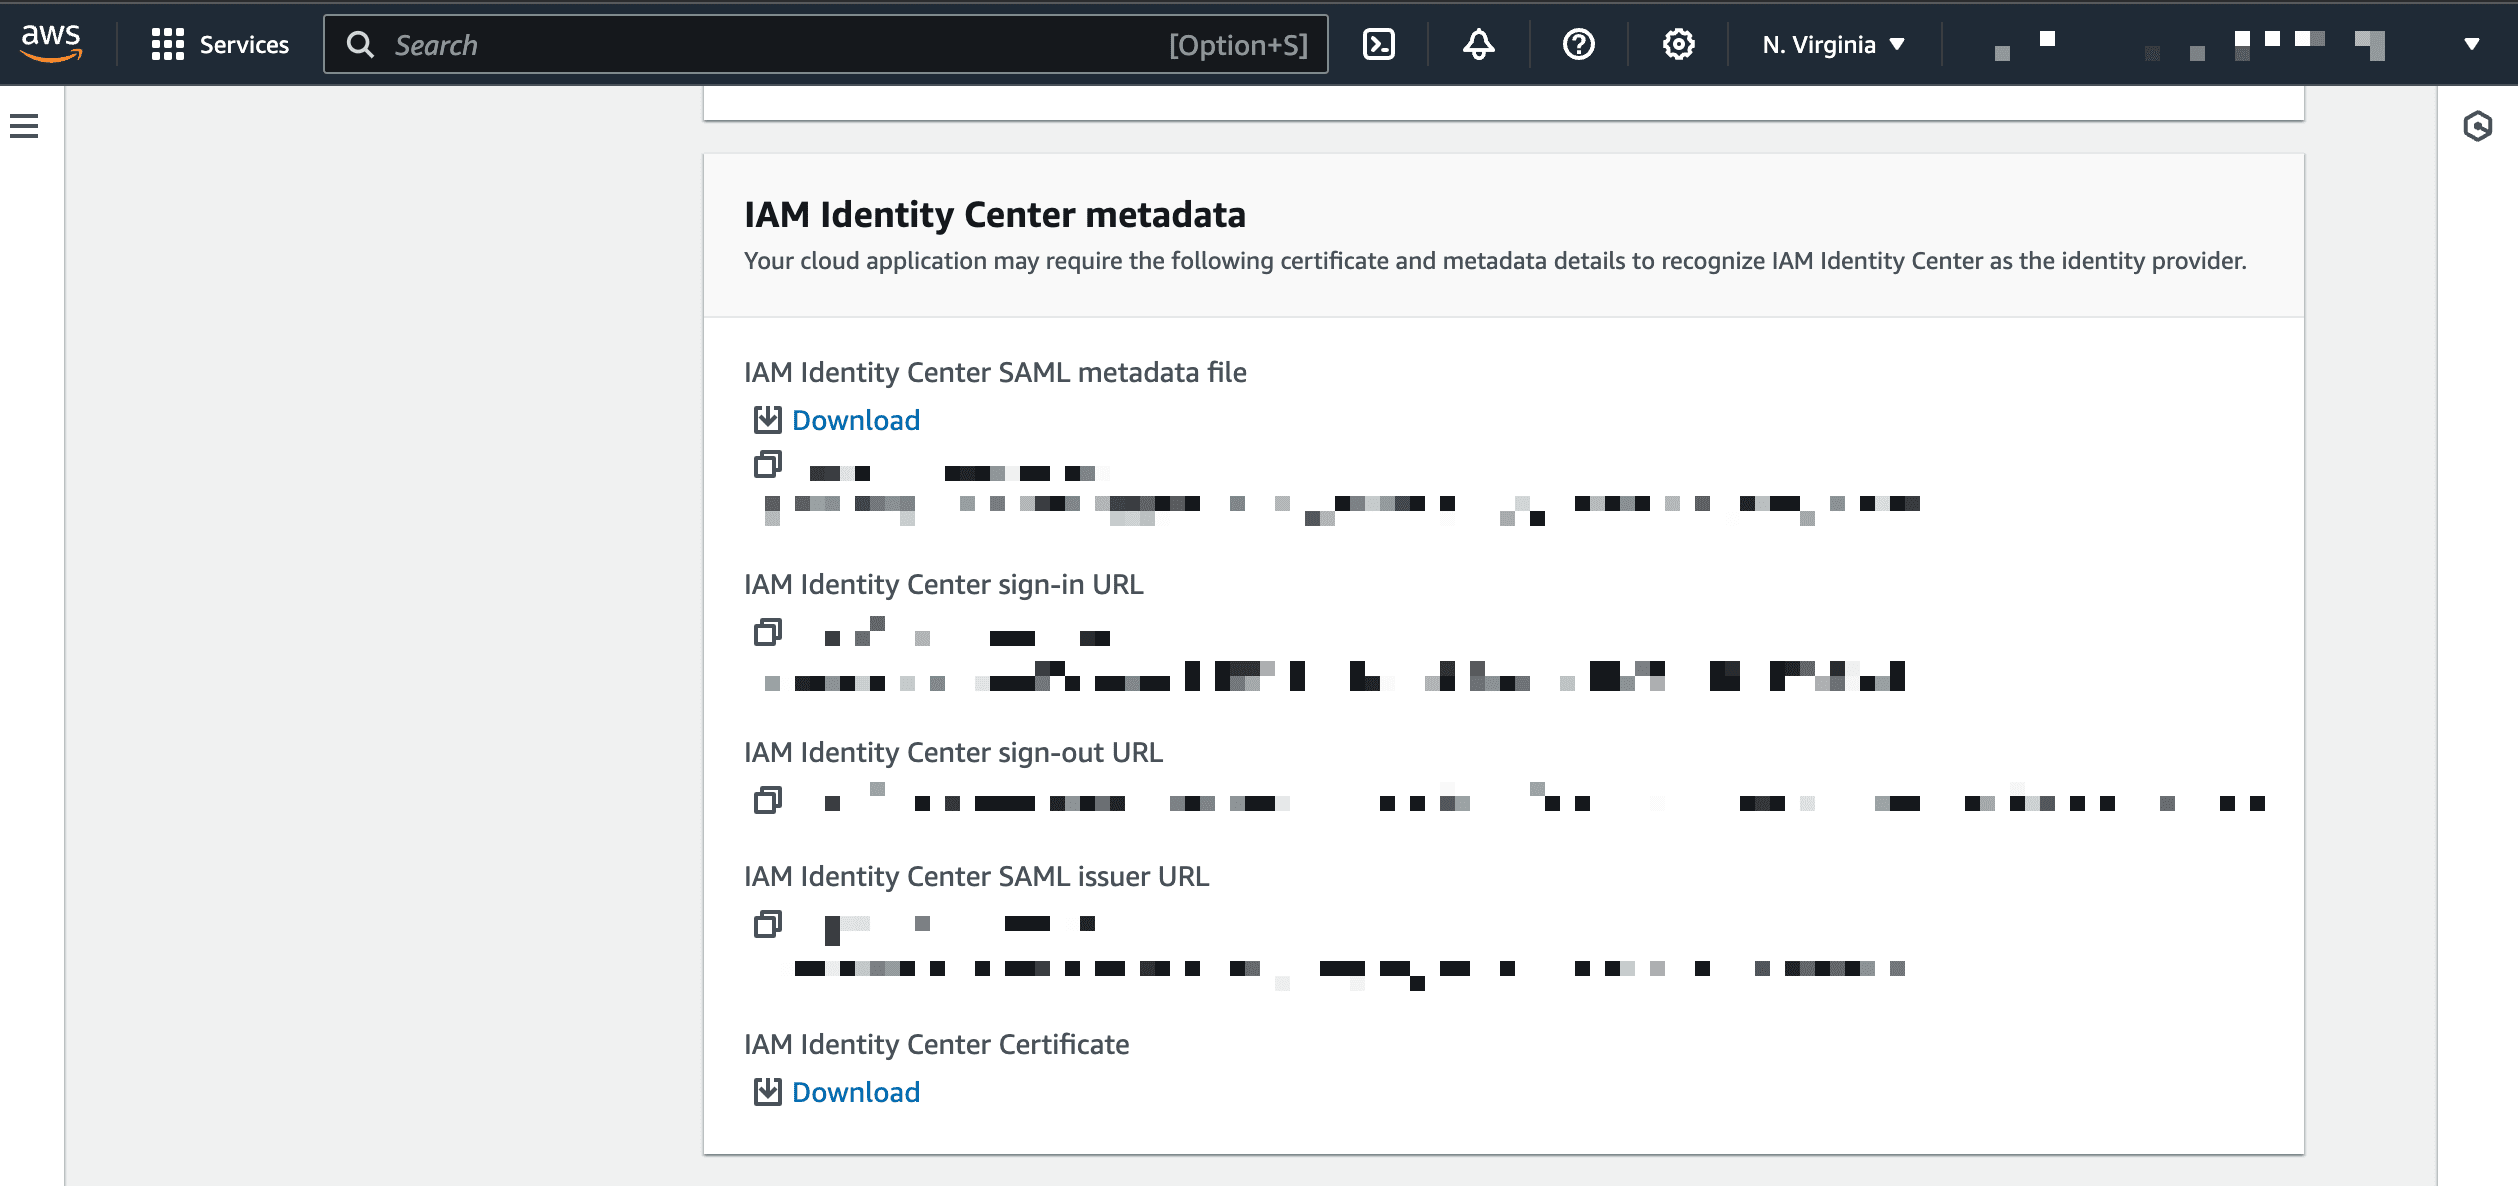 IAM Identity Center metadata